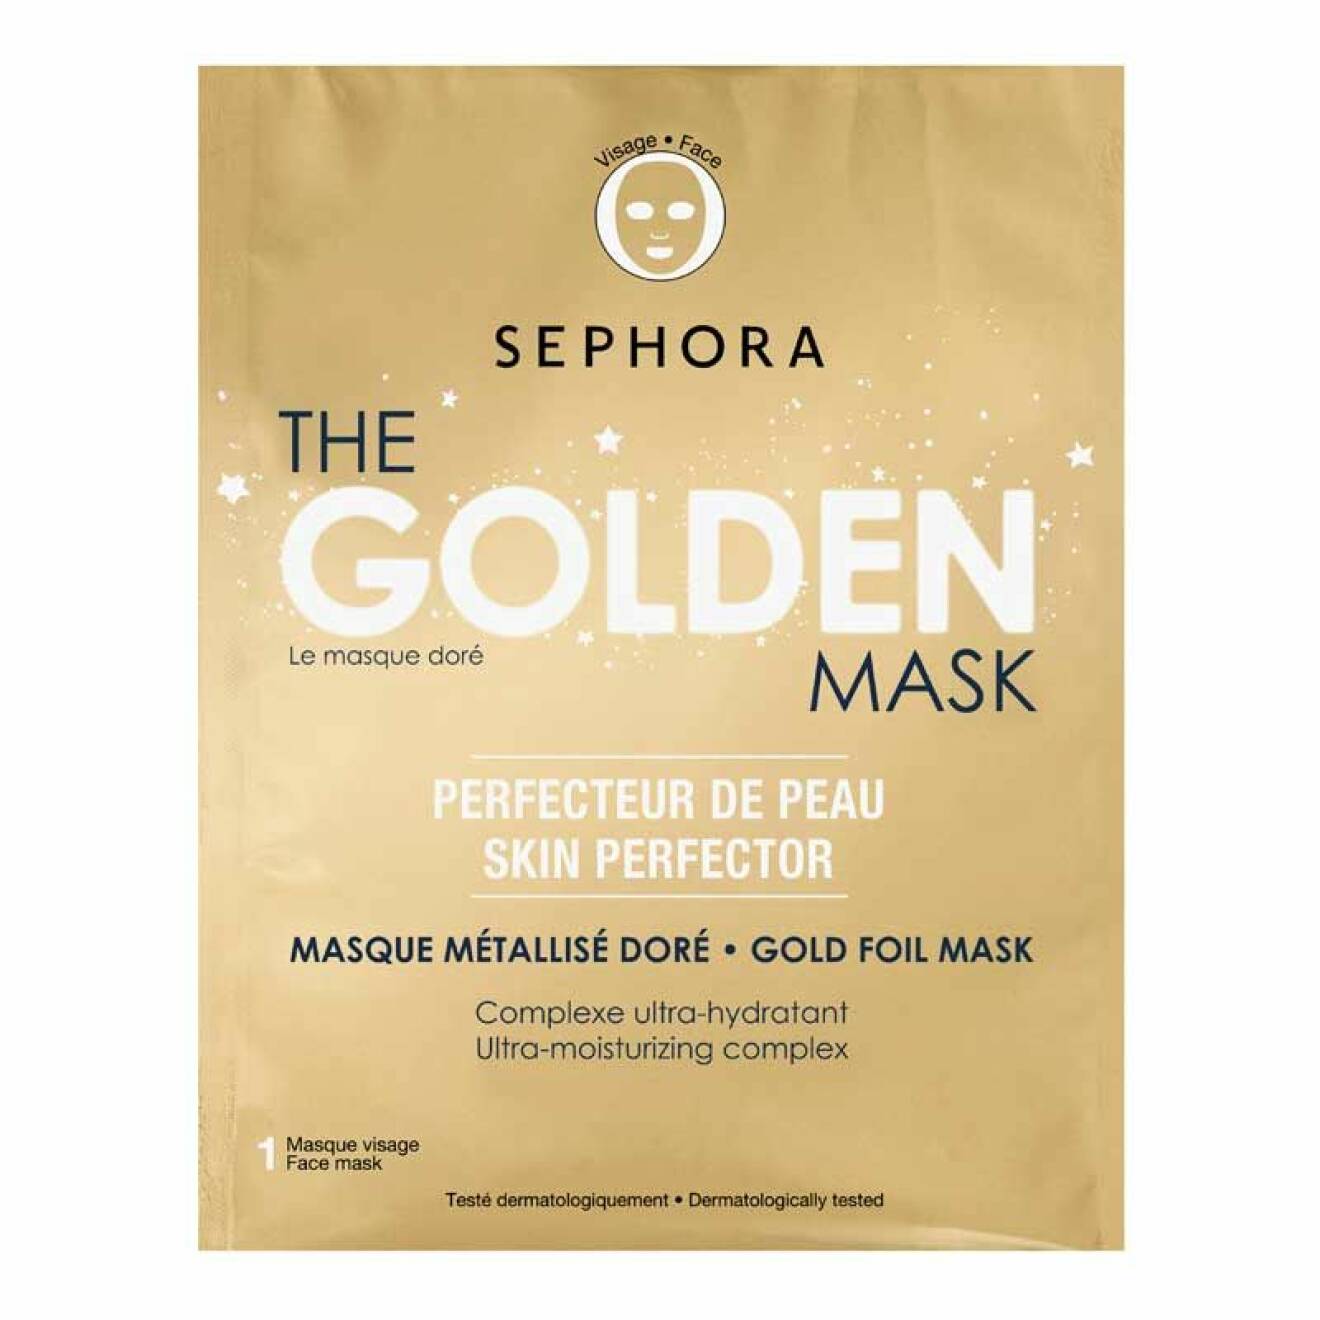 1. Sephoras The Golden Mask